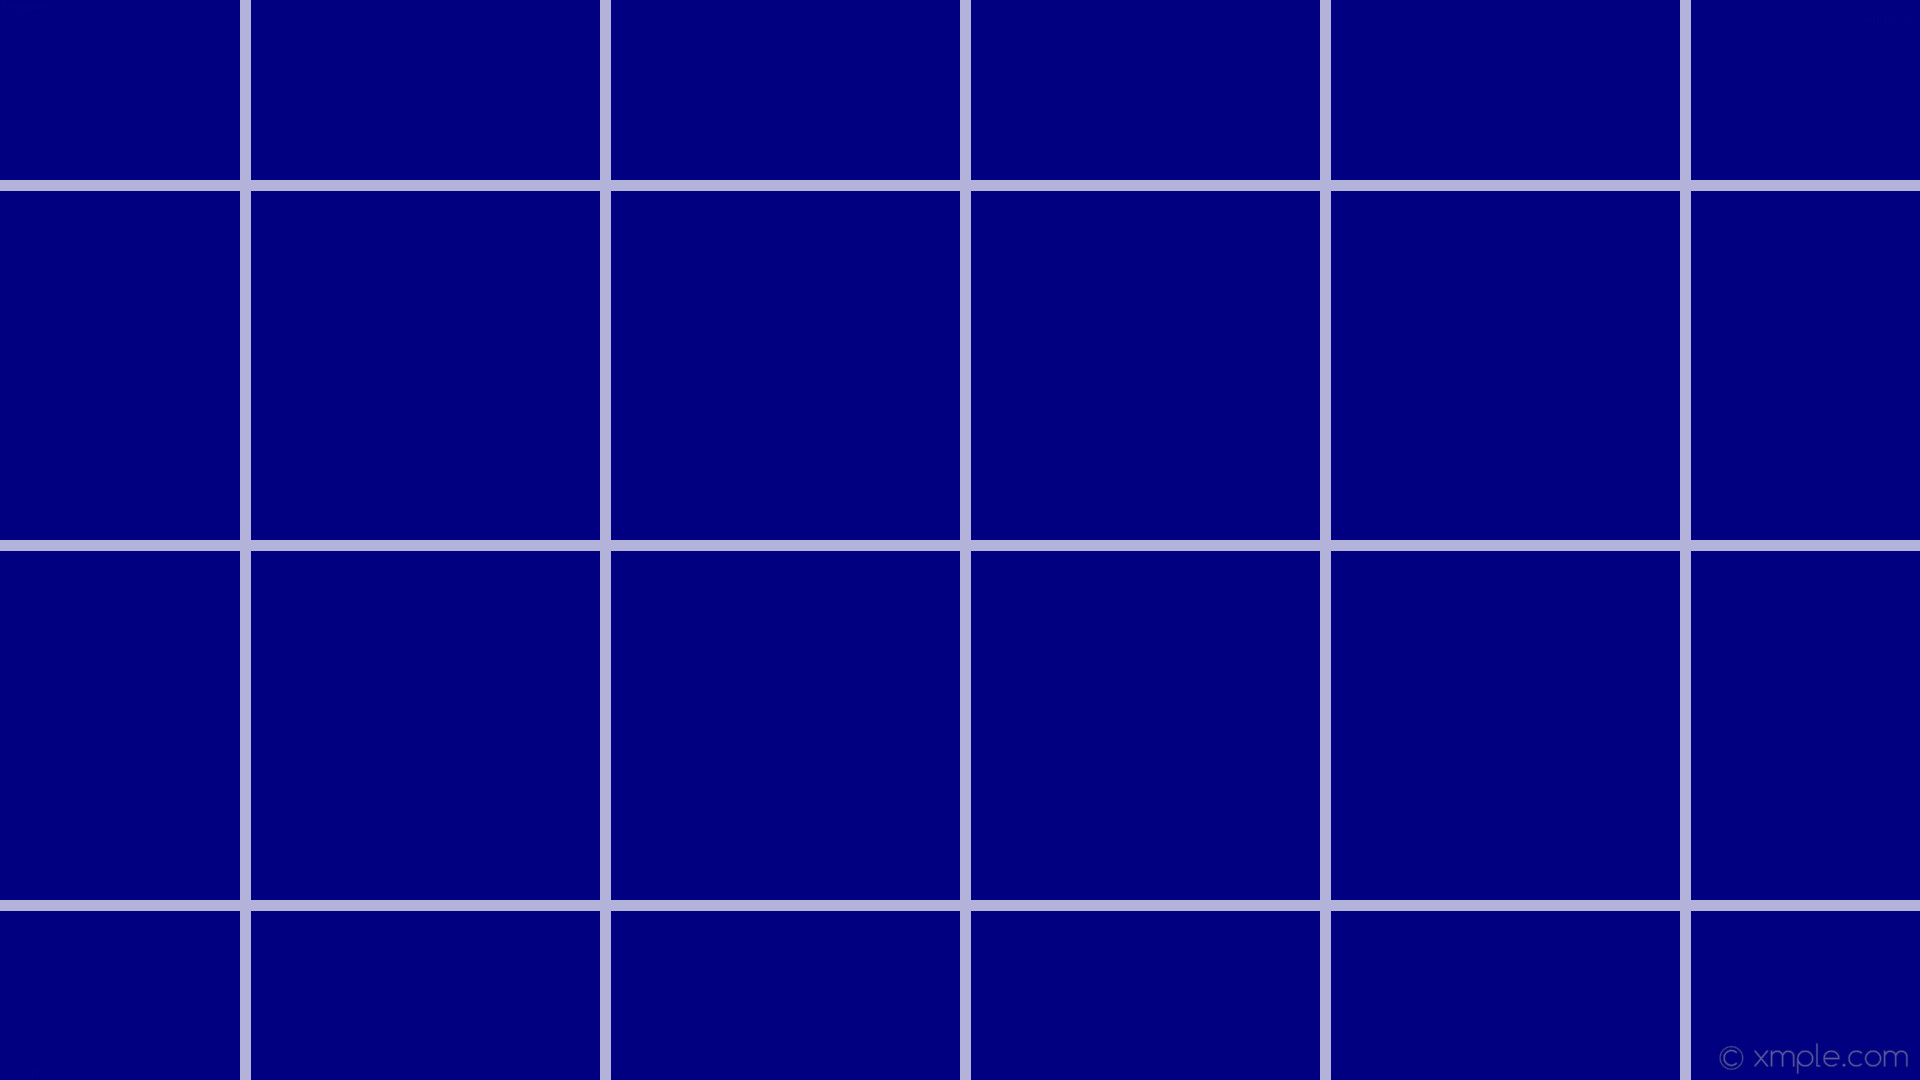 1920x1080 wallpaper graph paper white blue grid navy #000080 #ffffff 0Â° 11px 360px